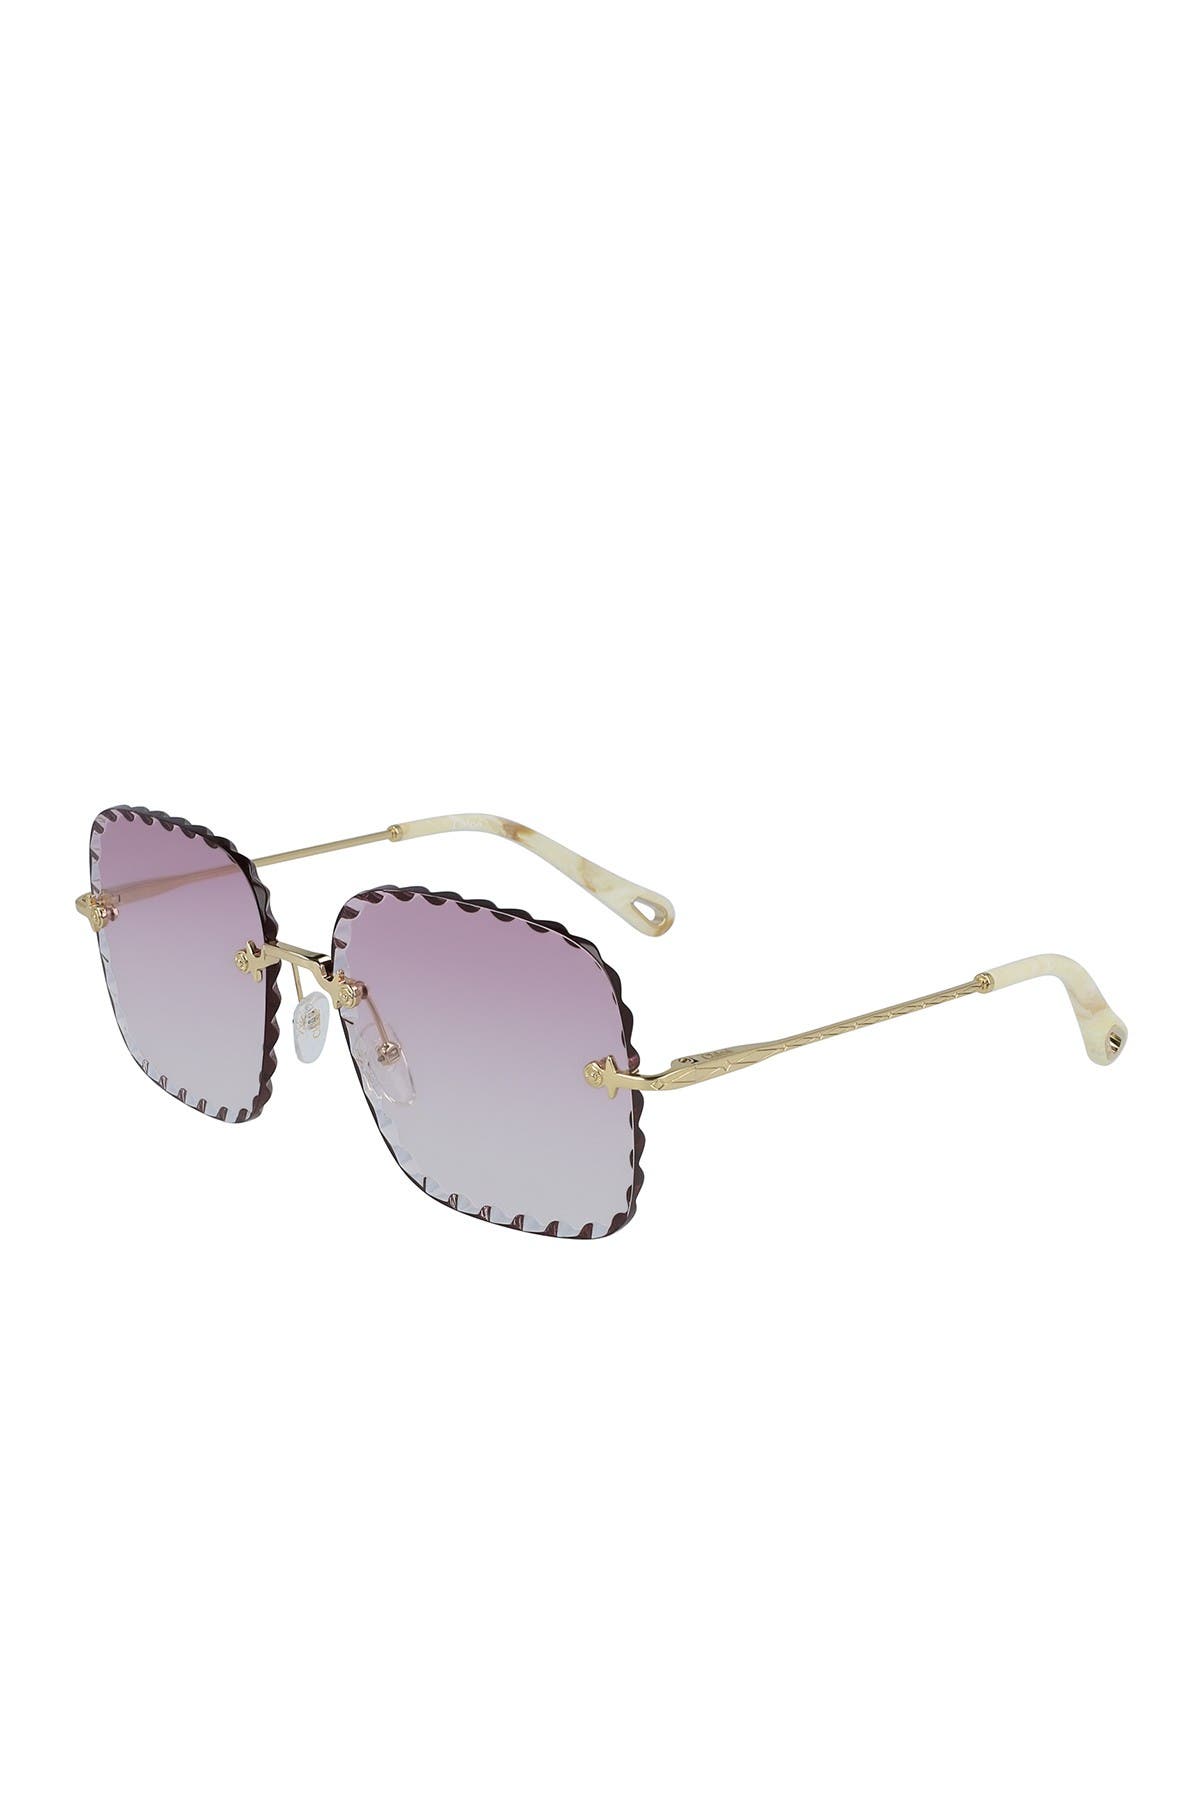 Chloé Rosie 59mm Square Sunglasses In Gold/ Gradient Rose